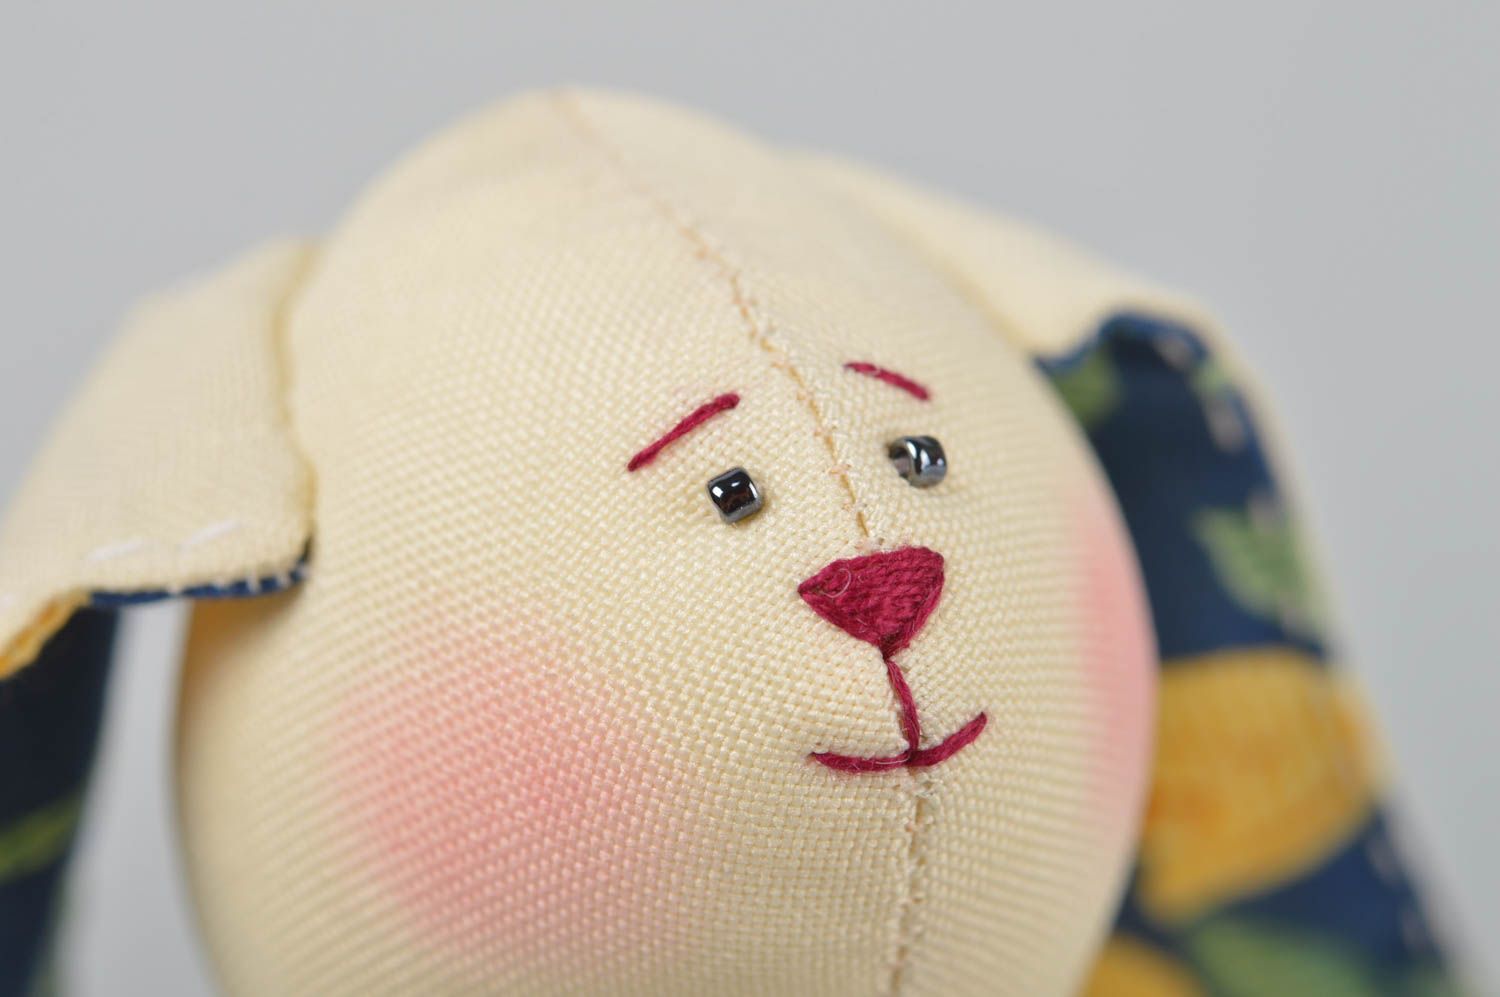 Juguete artesanal de tela natural muñeca de peluche regalo original para niño foto 3